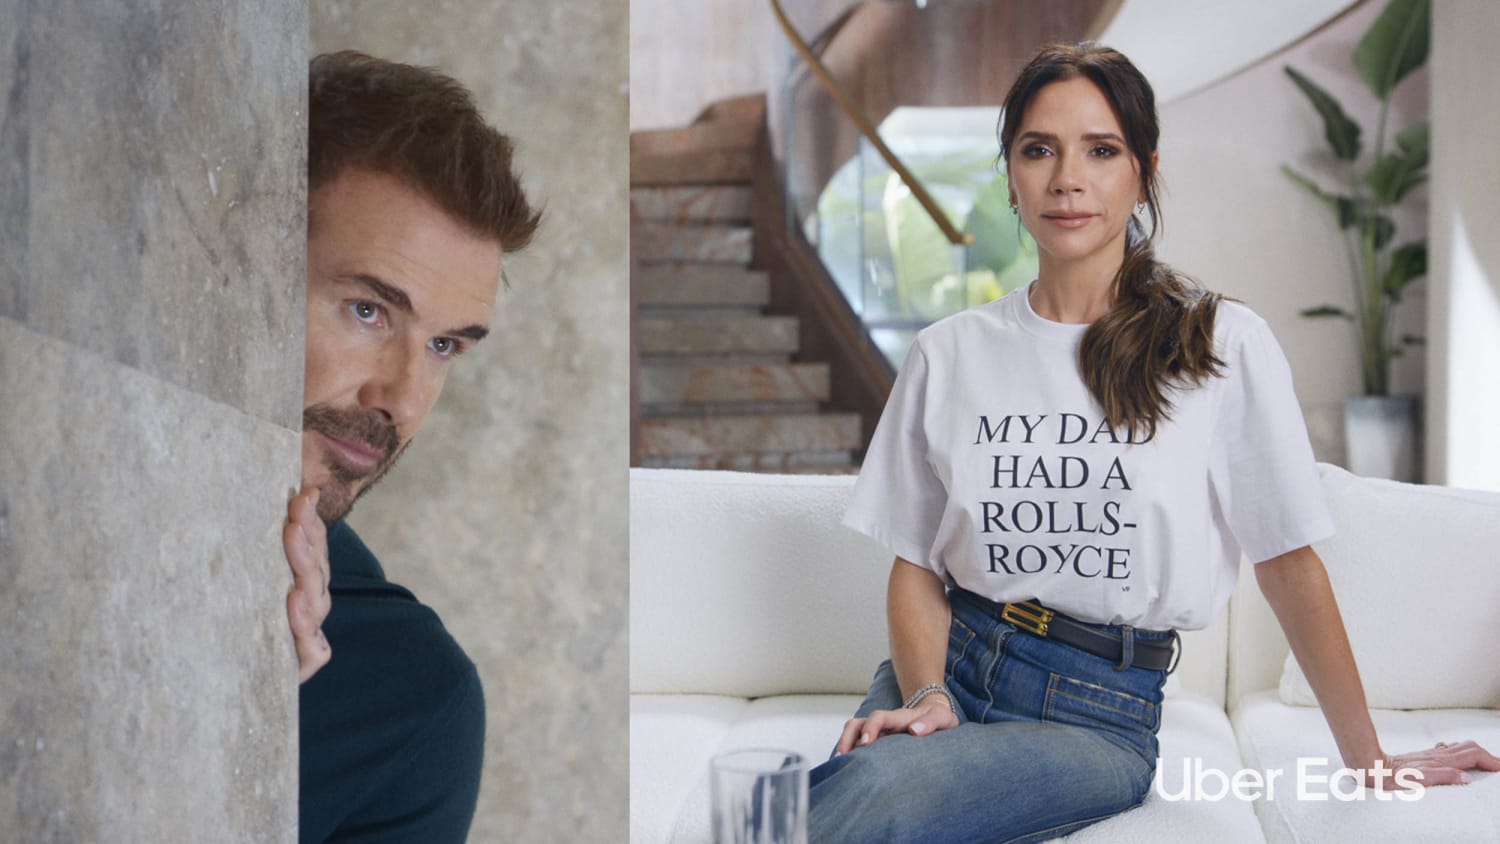 'Be honest': David and Victoria Beckham re-create viral moment for Uber Eats Super Bowl teaser